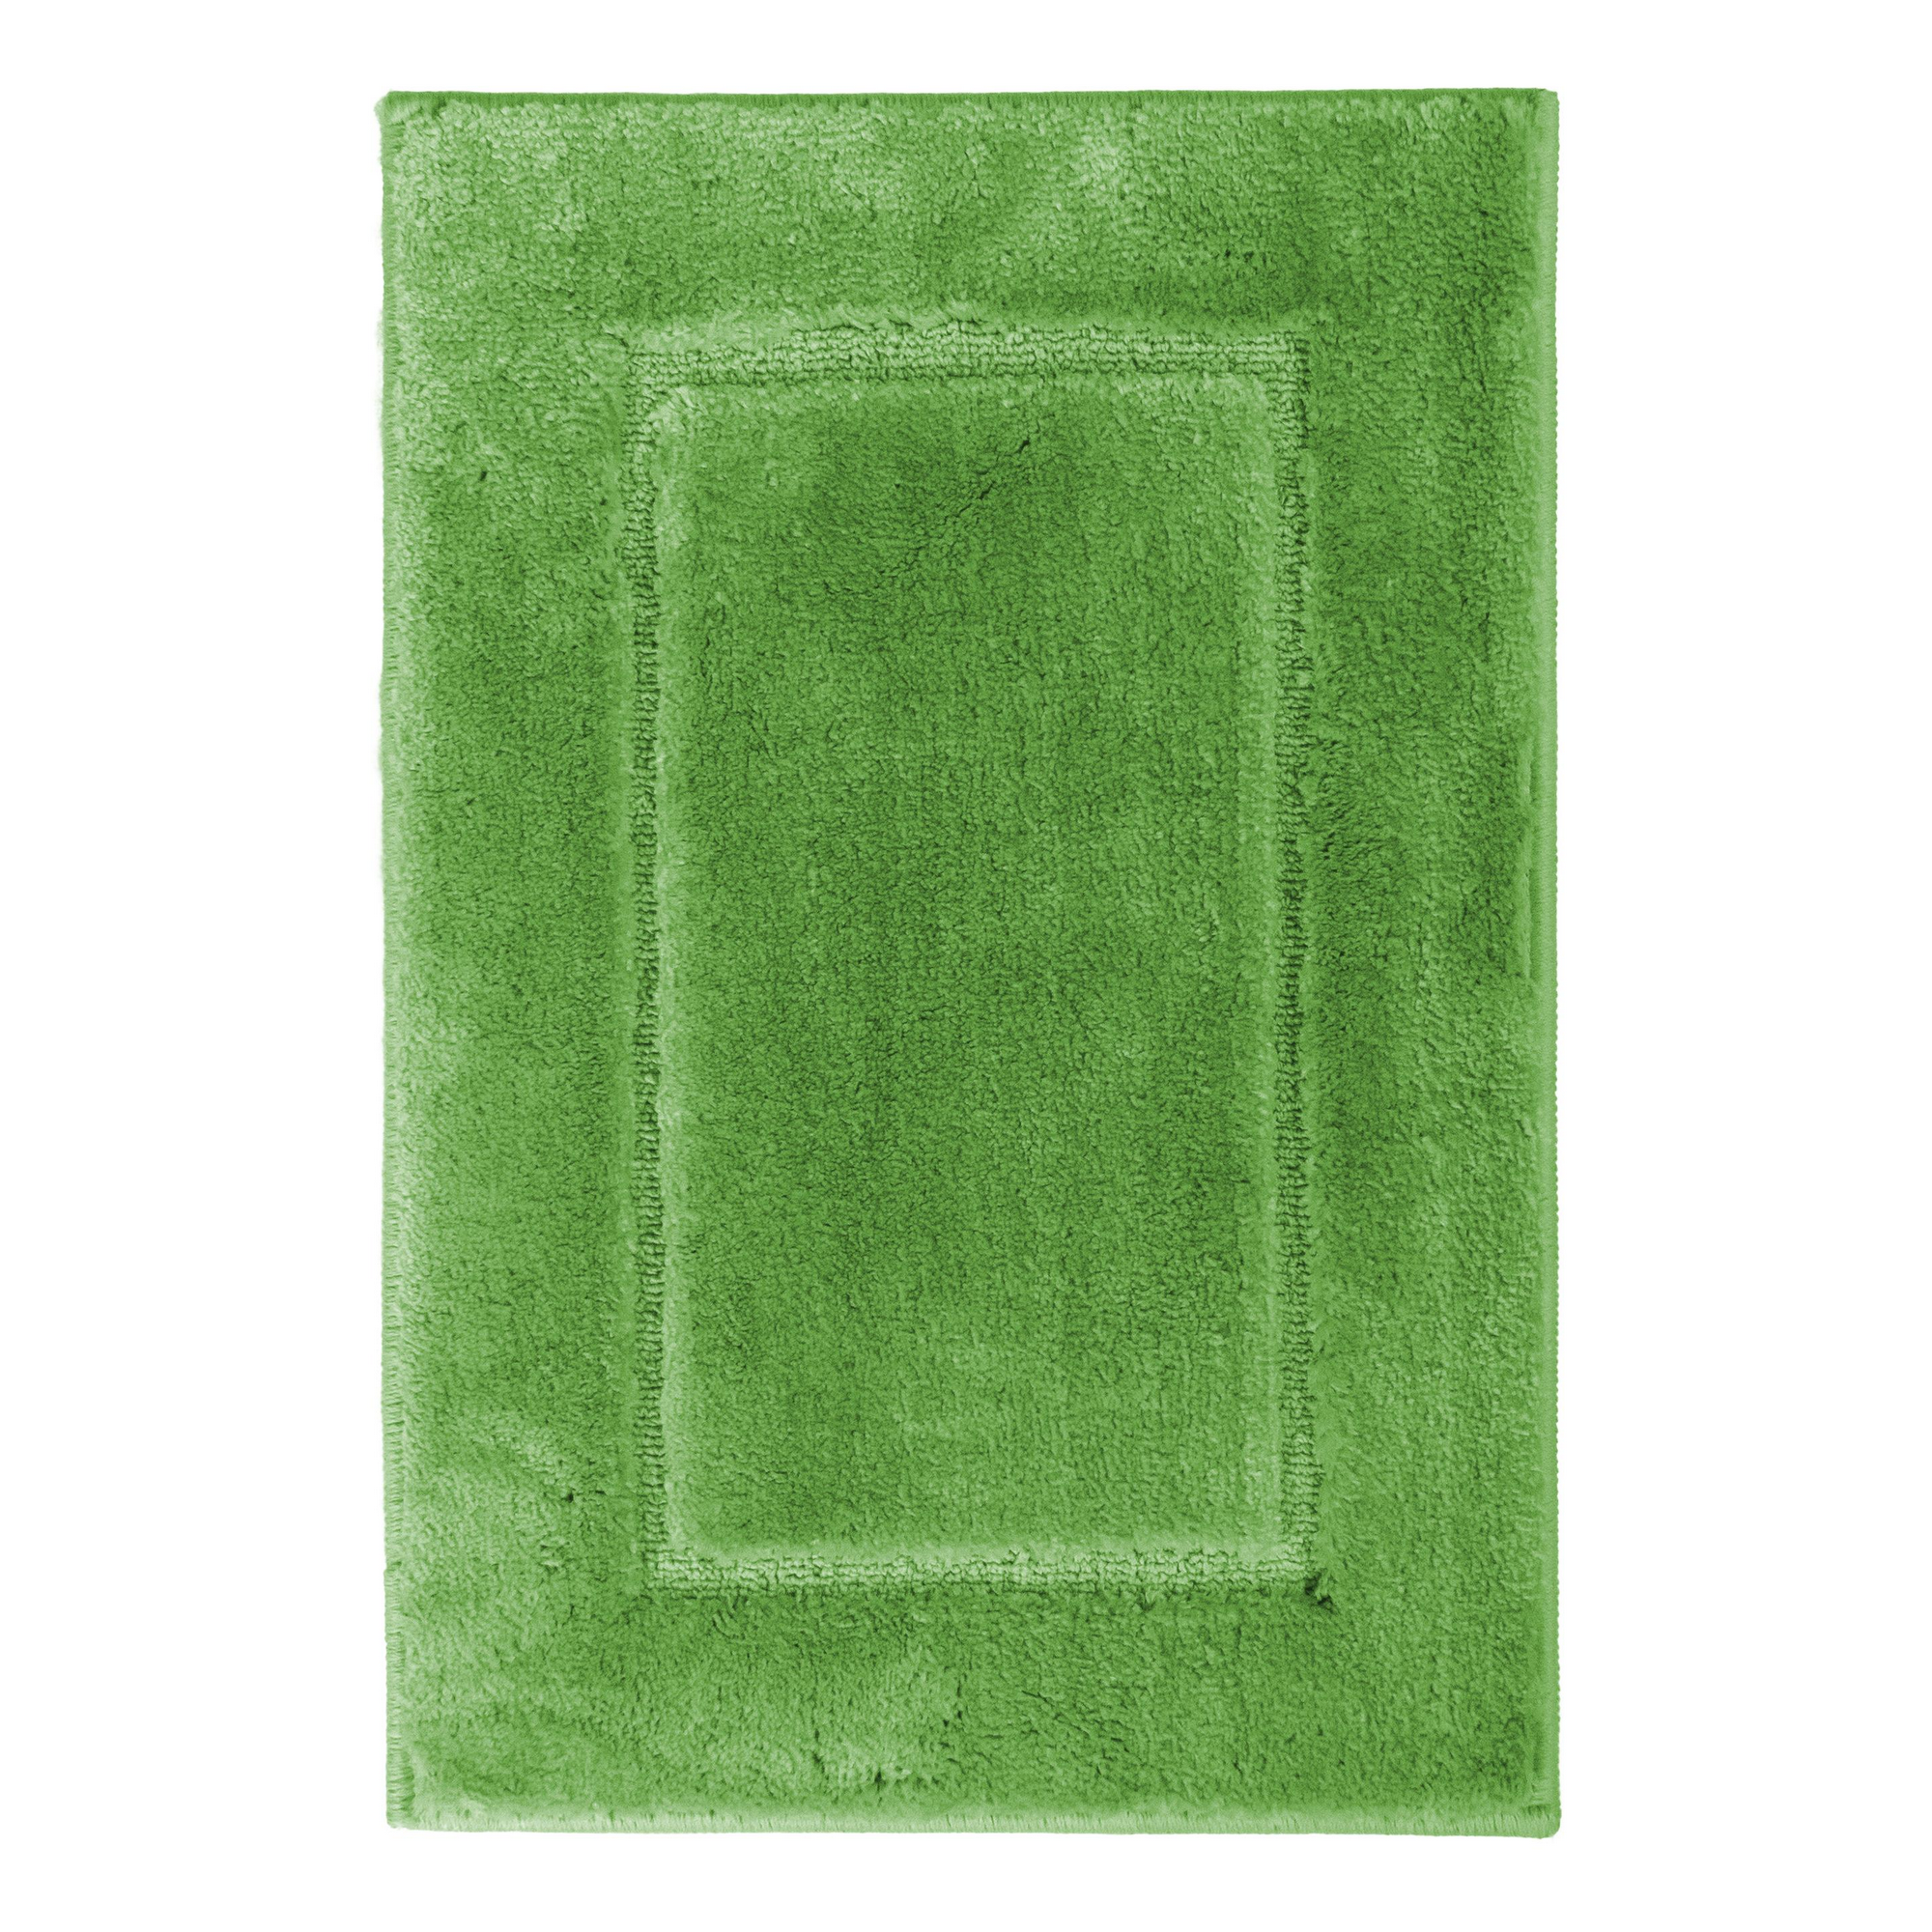 Badteppich 'Stadion' Microfaser grün 50 x 50 cm + product picture